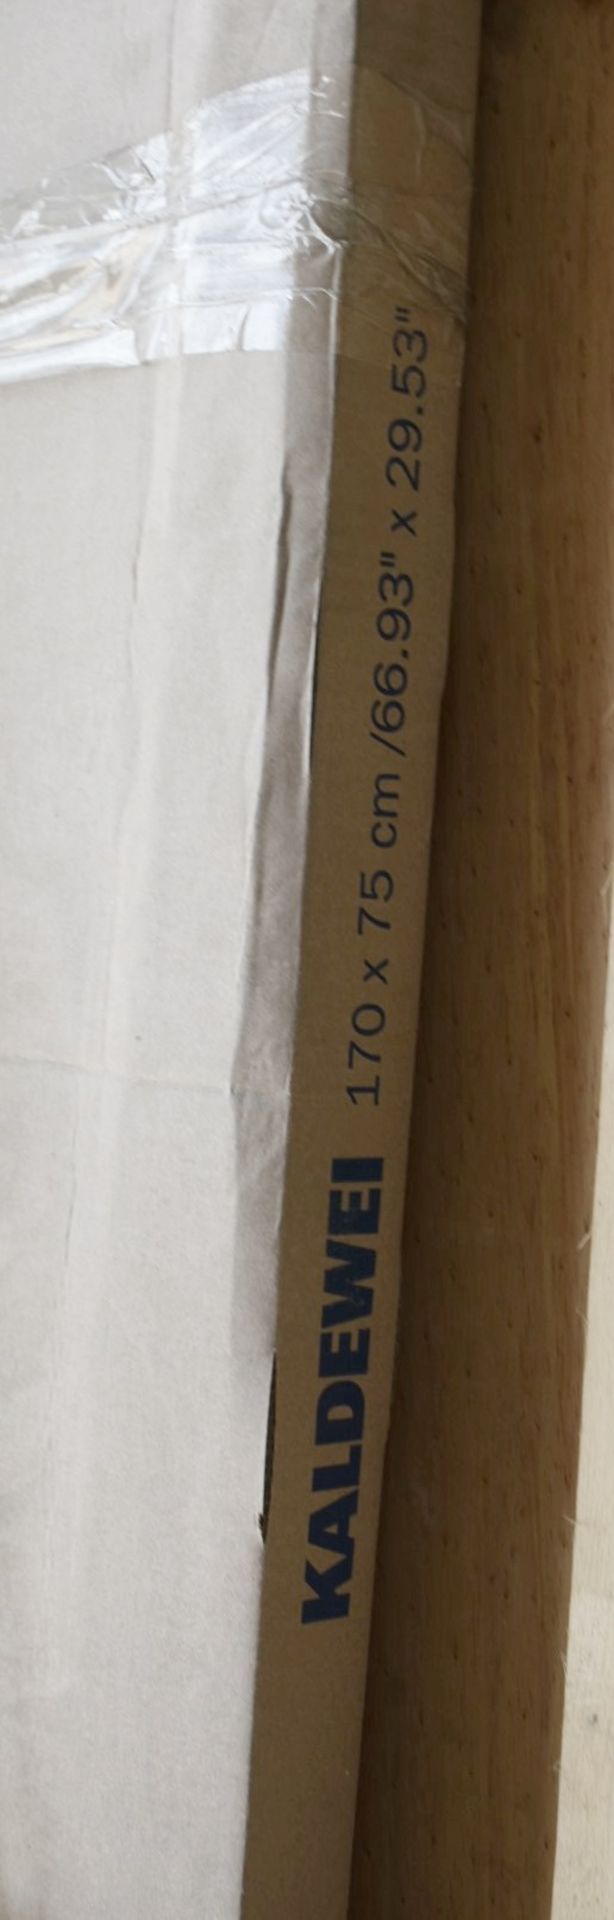 1 x KALDEWEI 'Cayonoplan' Rectangular Steel Enamel Rectangular Shower Tray, In Beige - RRP £993.00 - Image 2 of 8